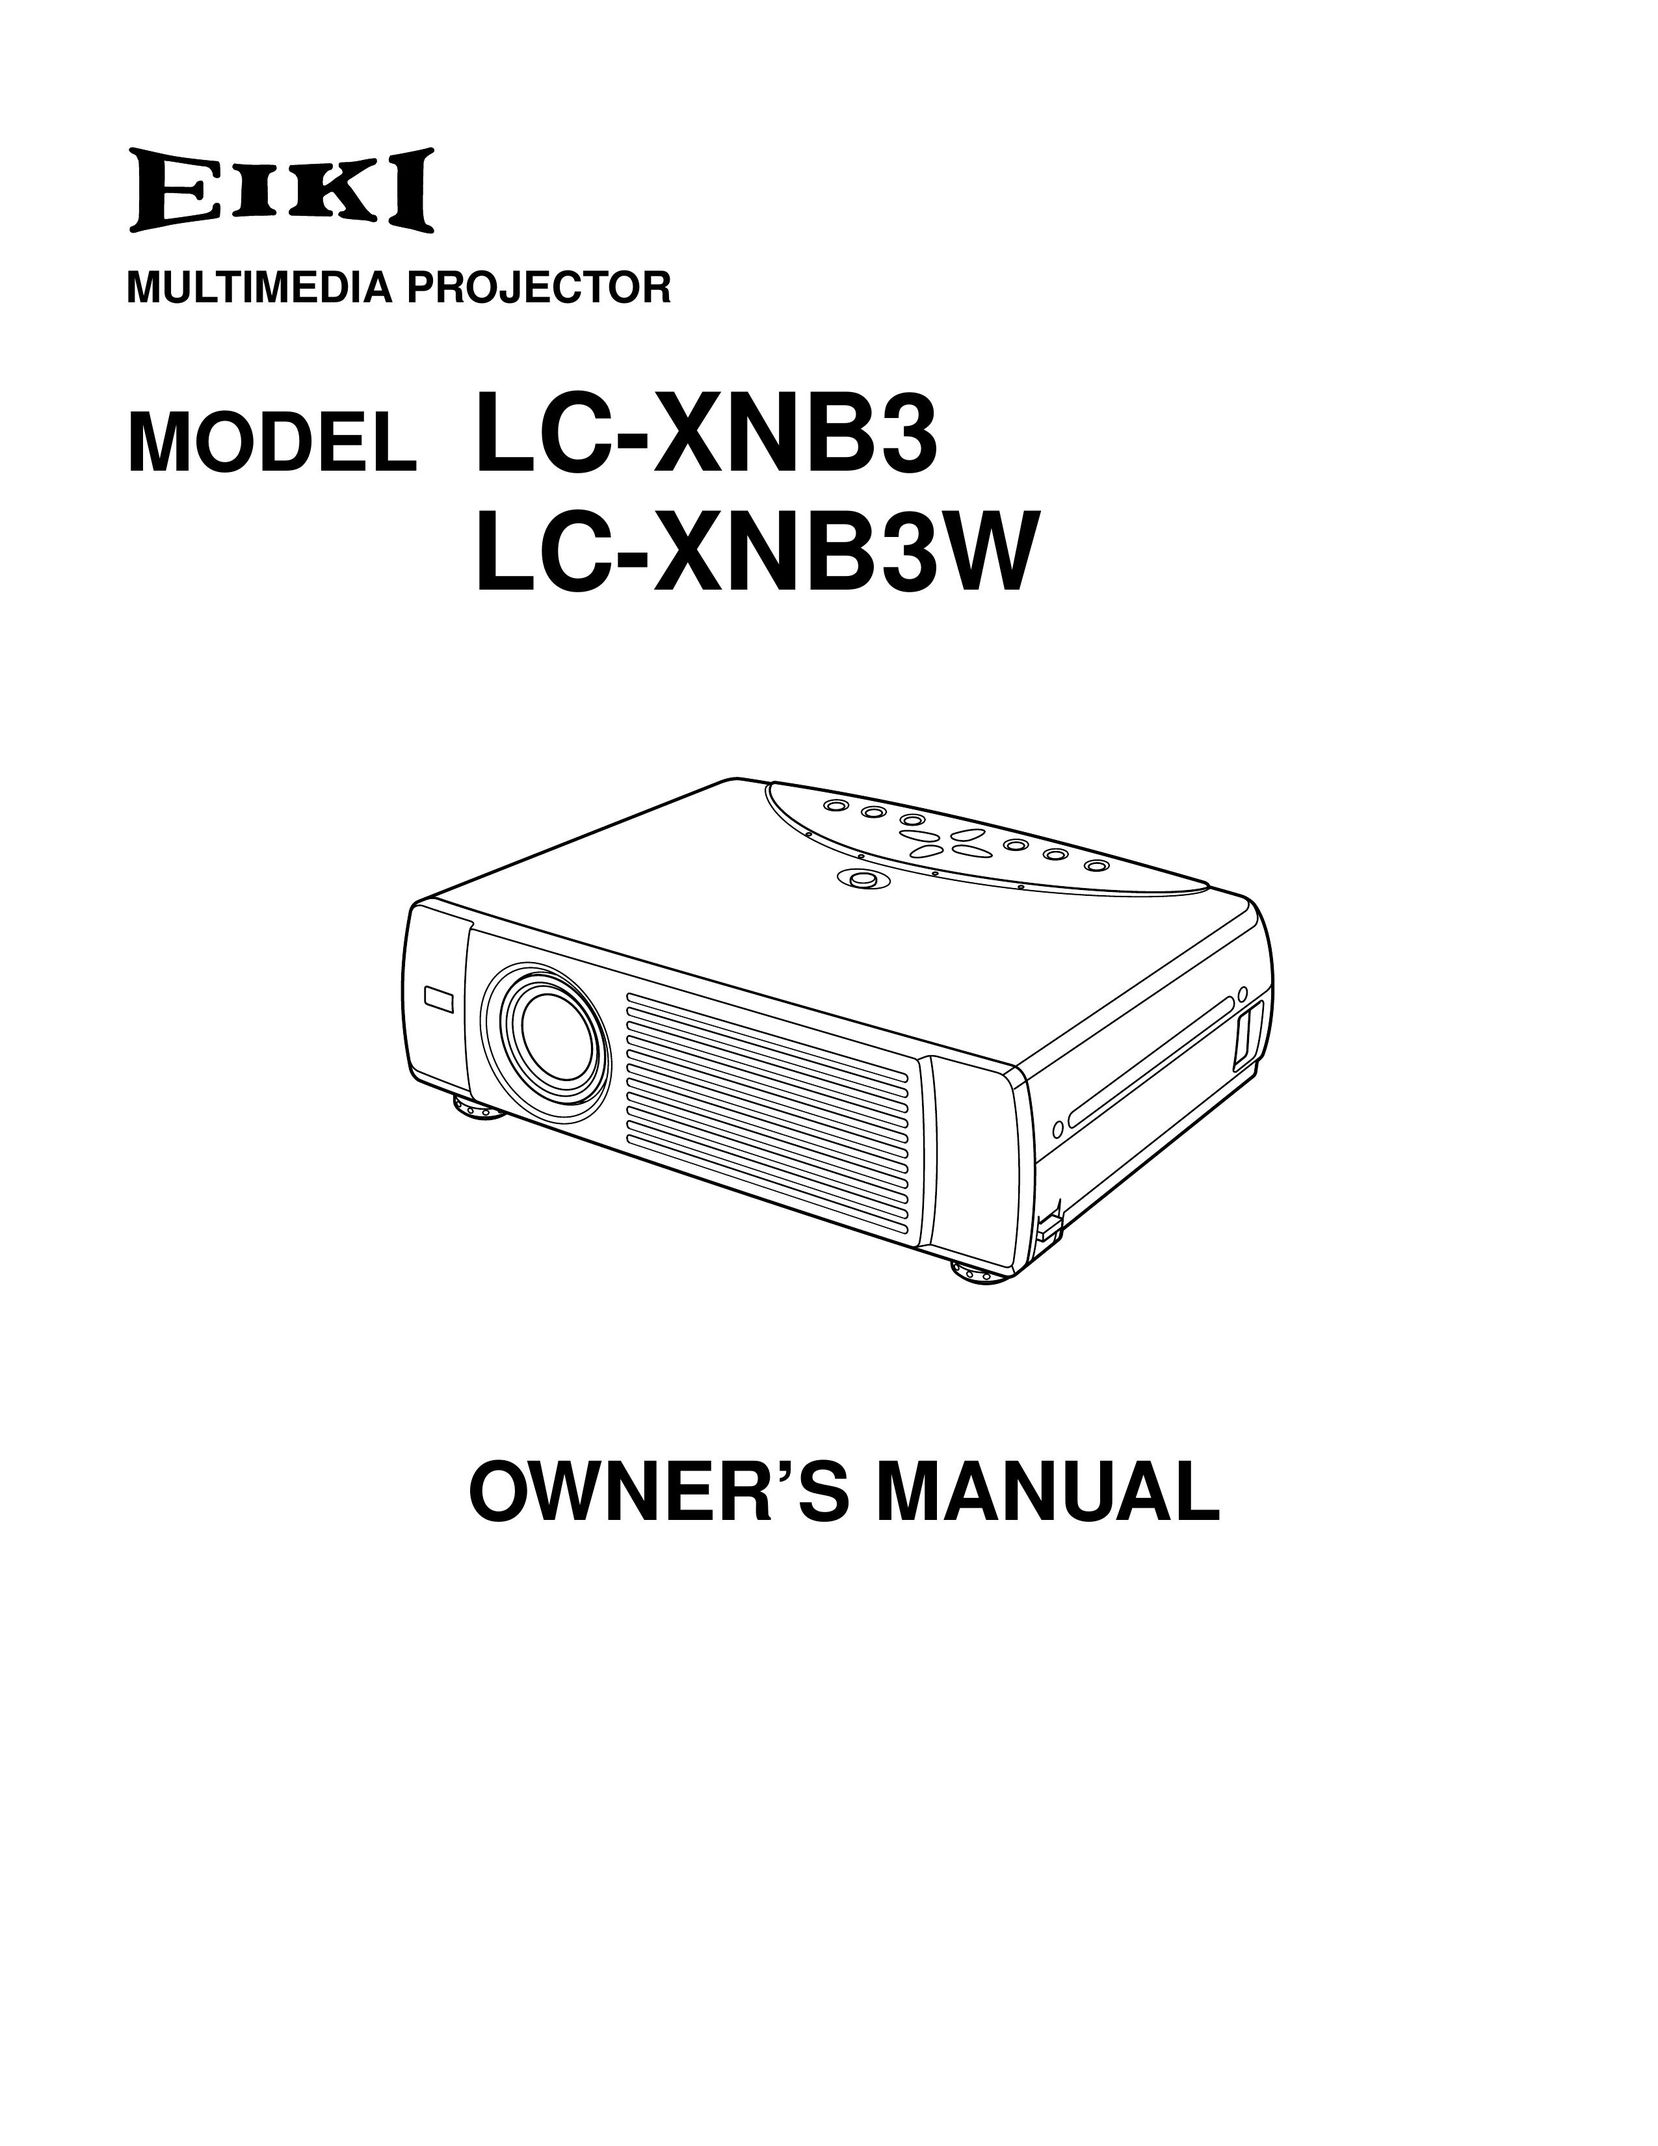 Eiki LC-XNB3 Network Card User Manual